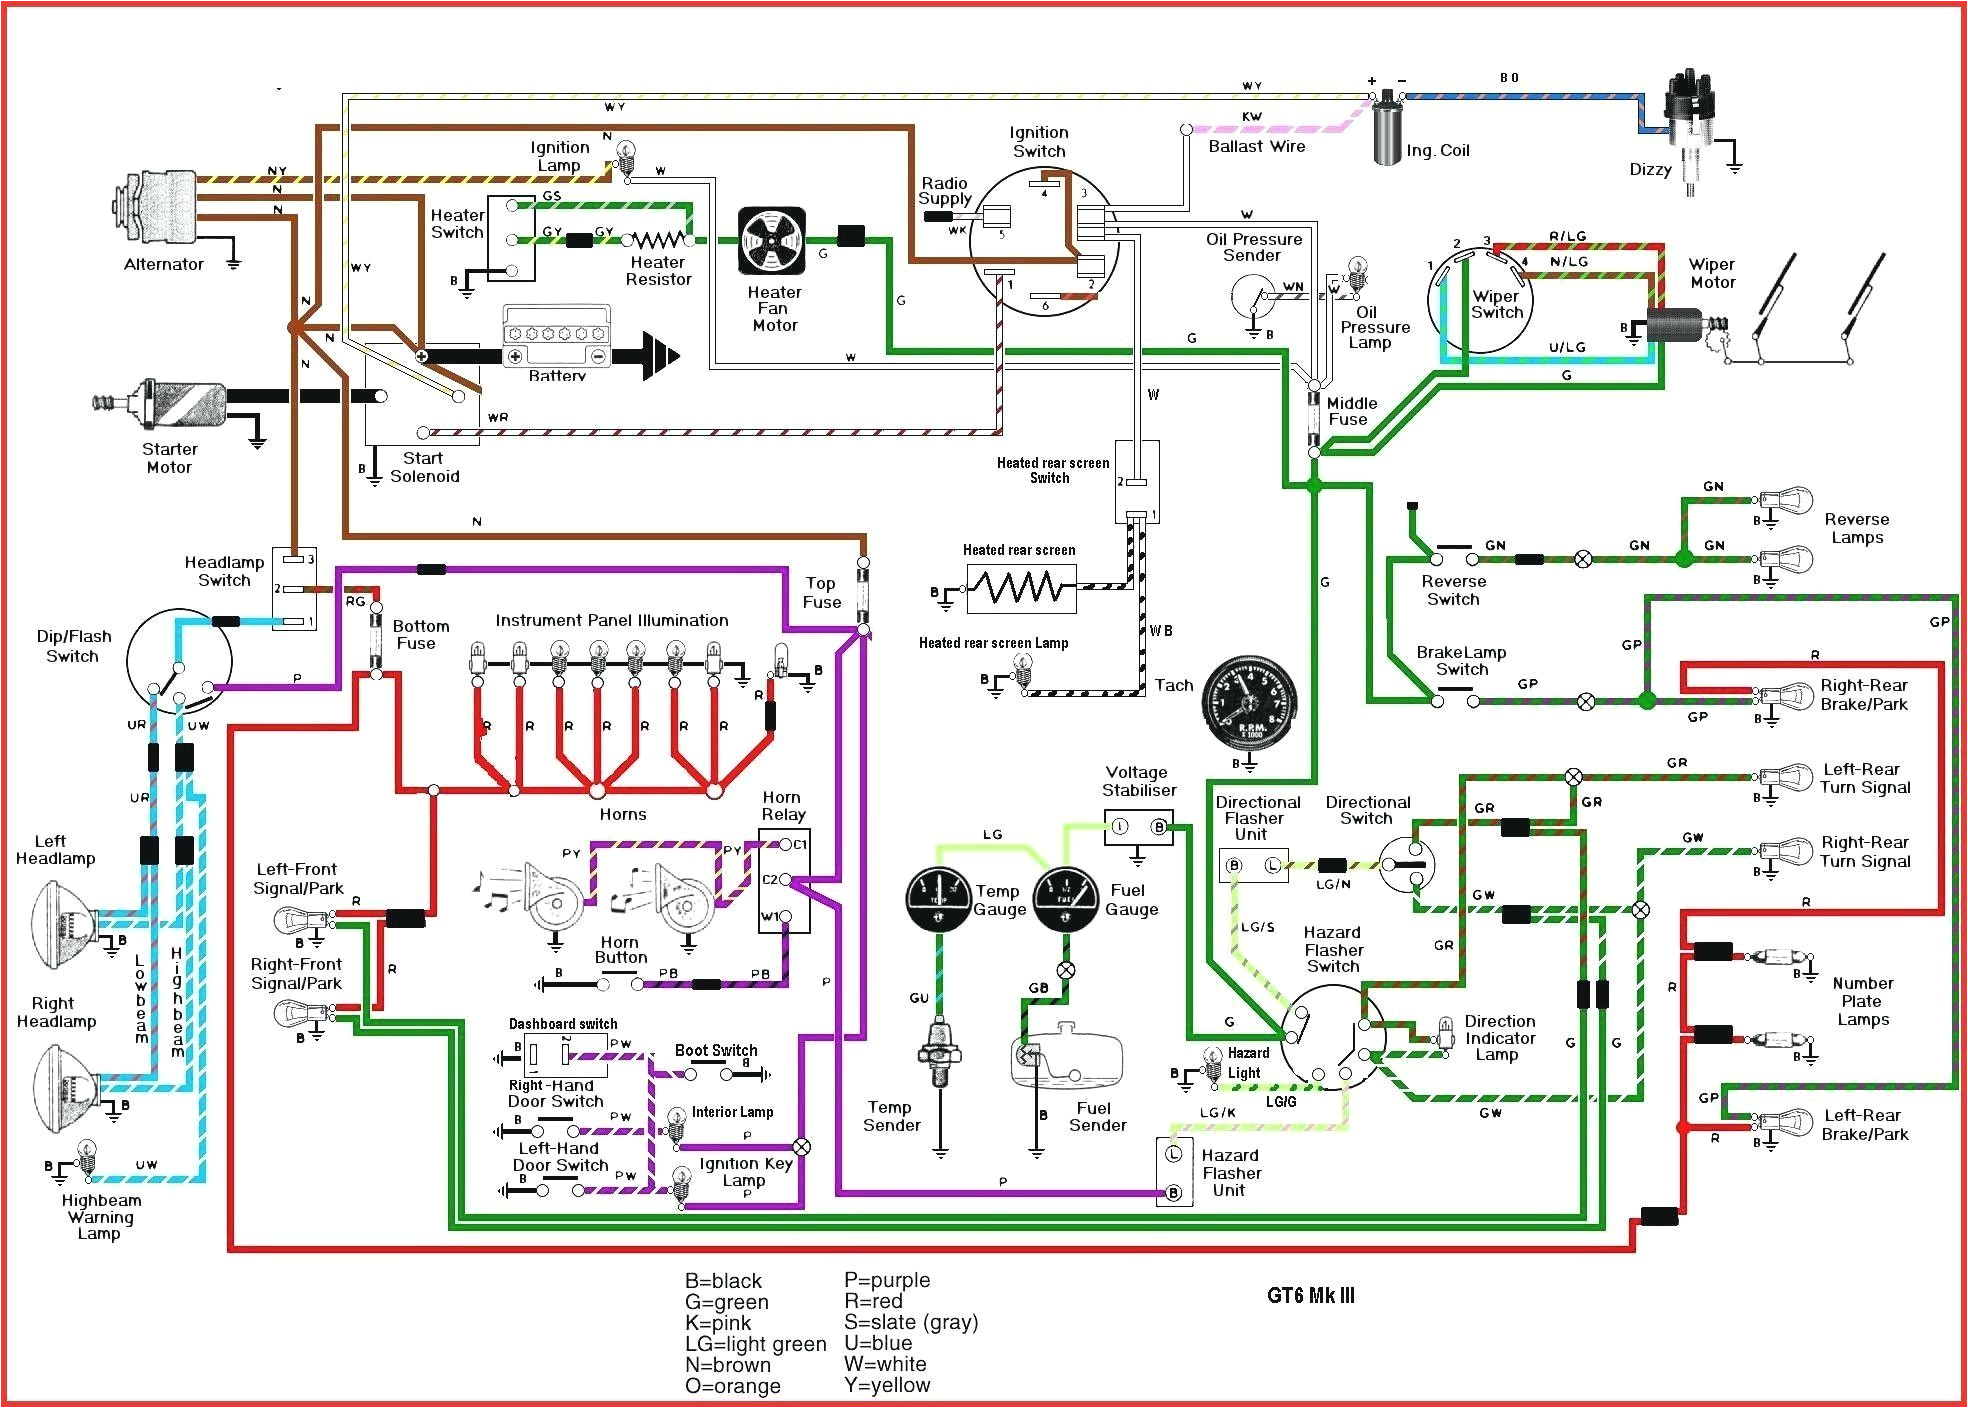 house wiring diagram online wiring diagram name home wiring diagram online house wiring diagram online